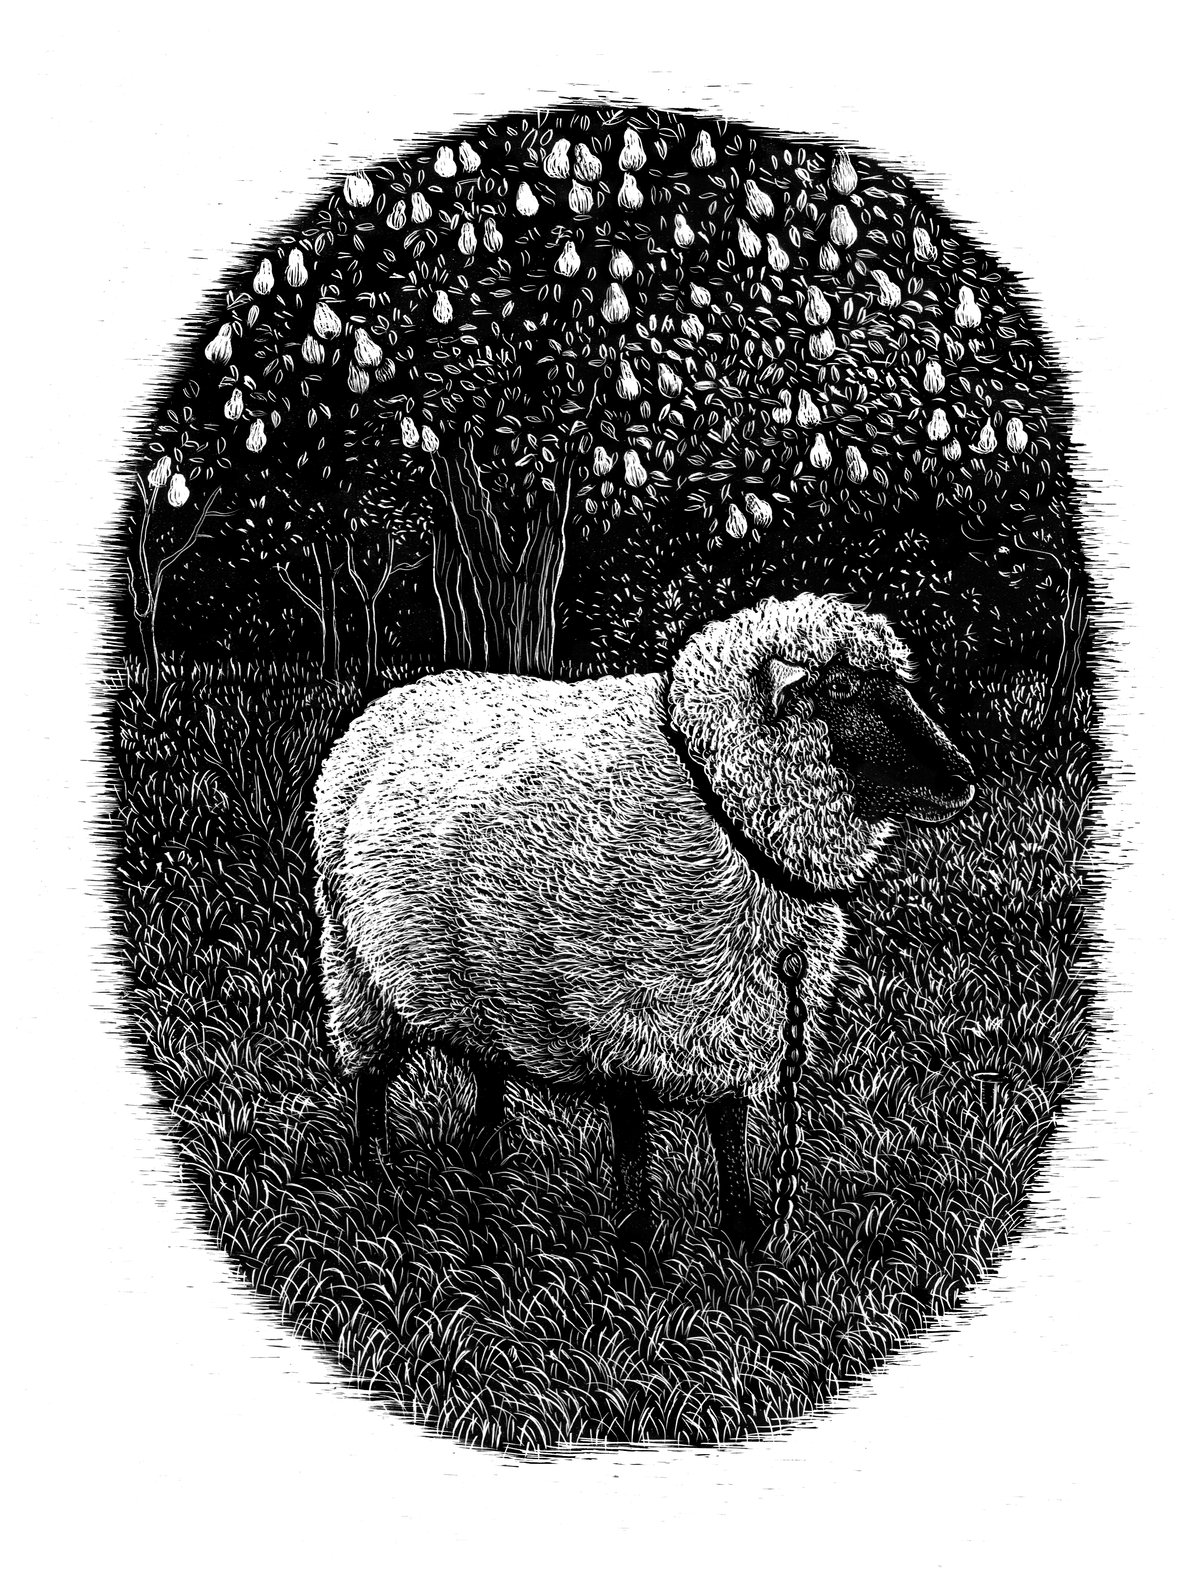 Image of »Sheep's Serenade beneath the Pear Tree«